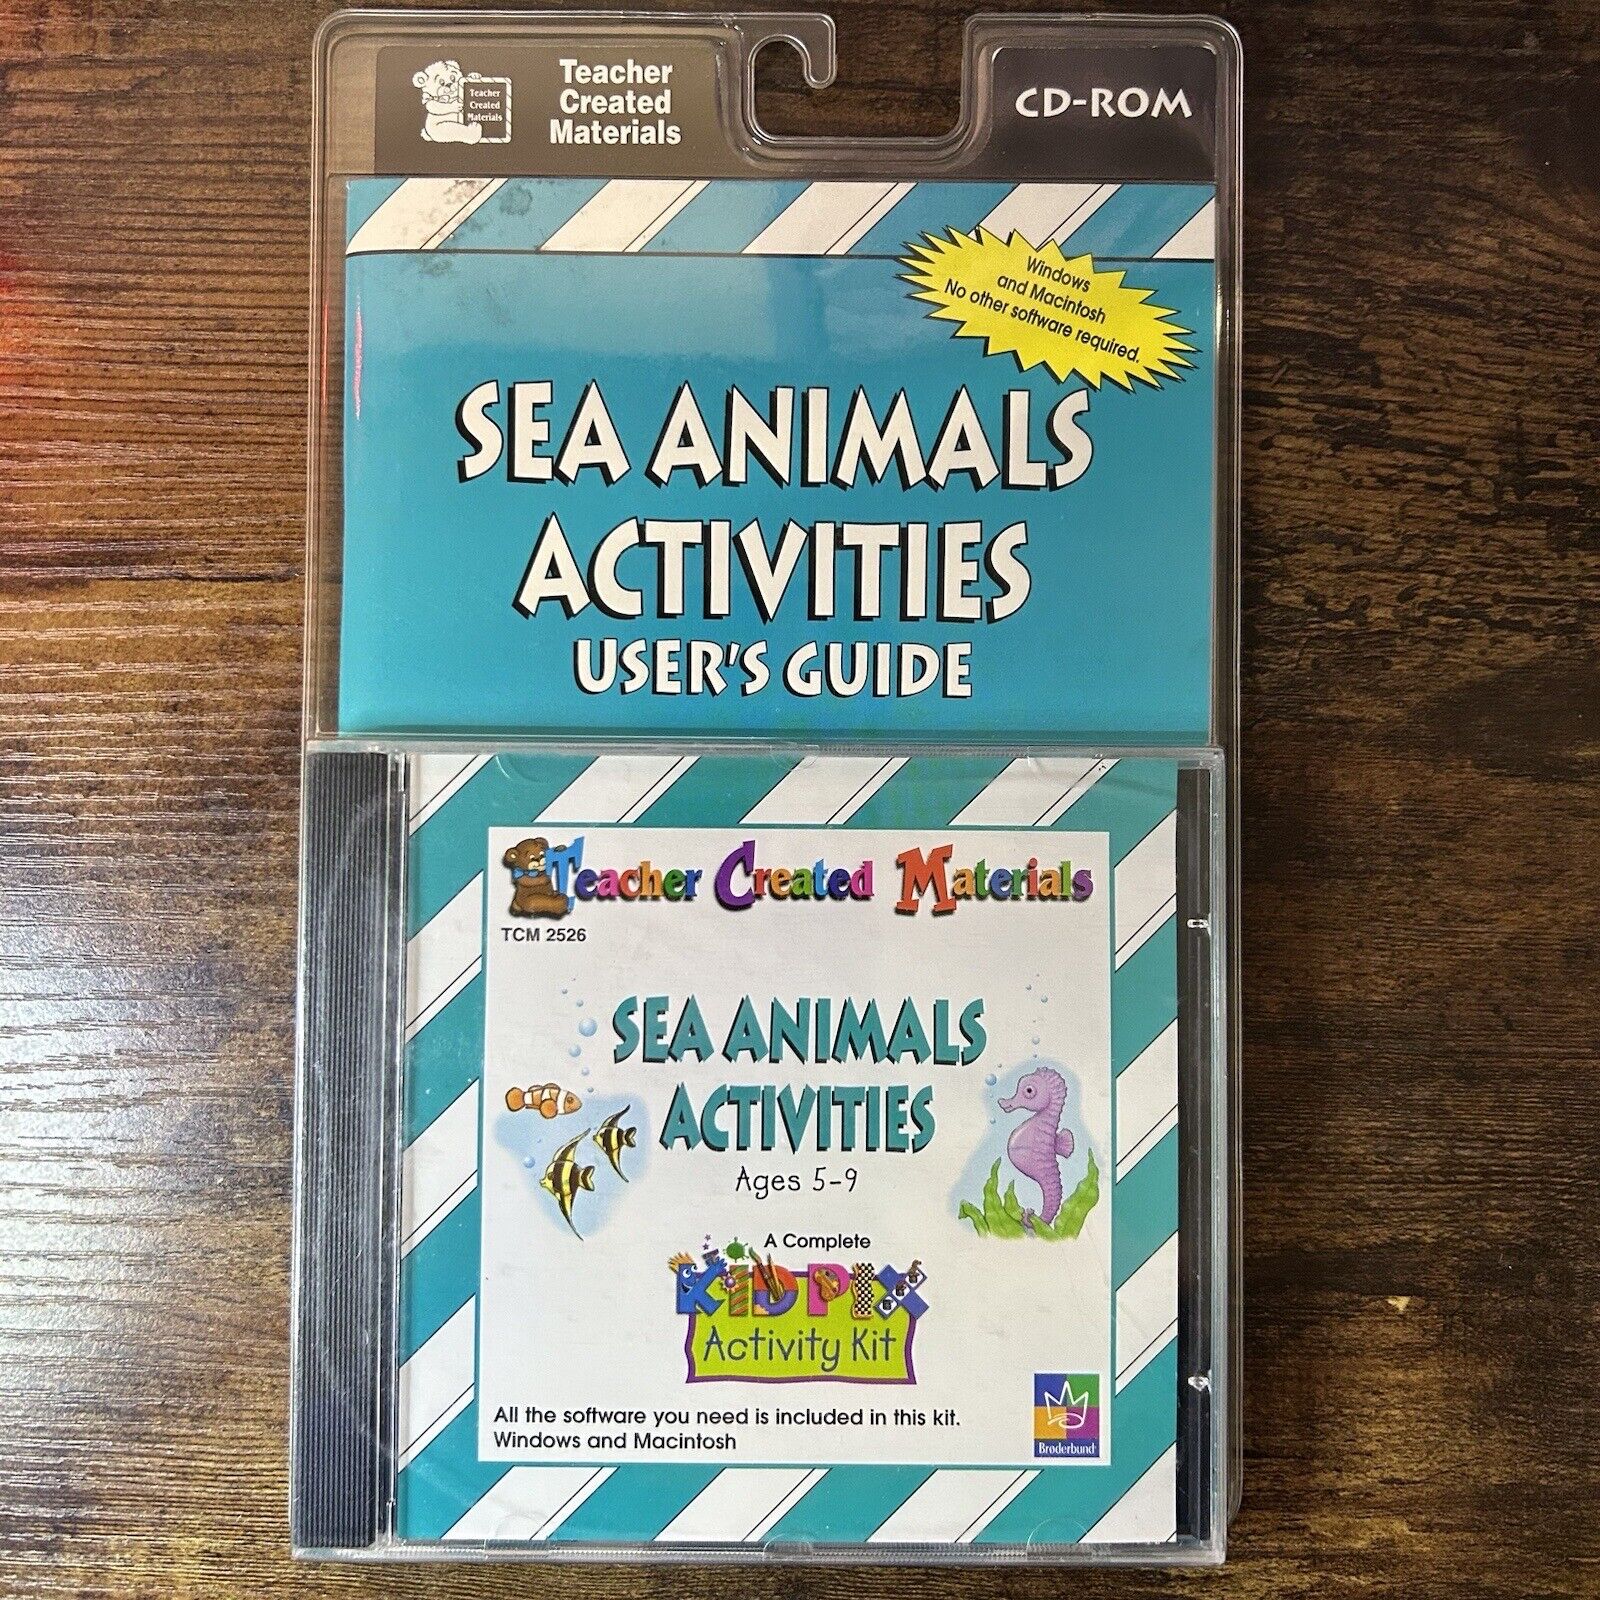 Sea Animals Activities New CD Rom Teacher Created Materials Activity Kit